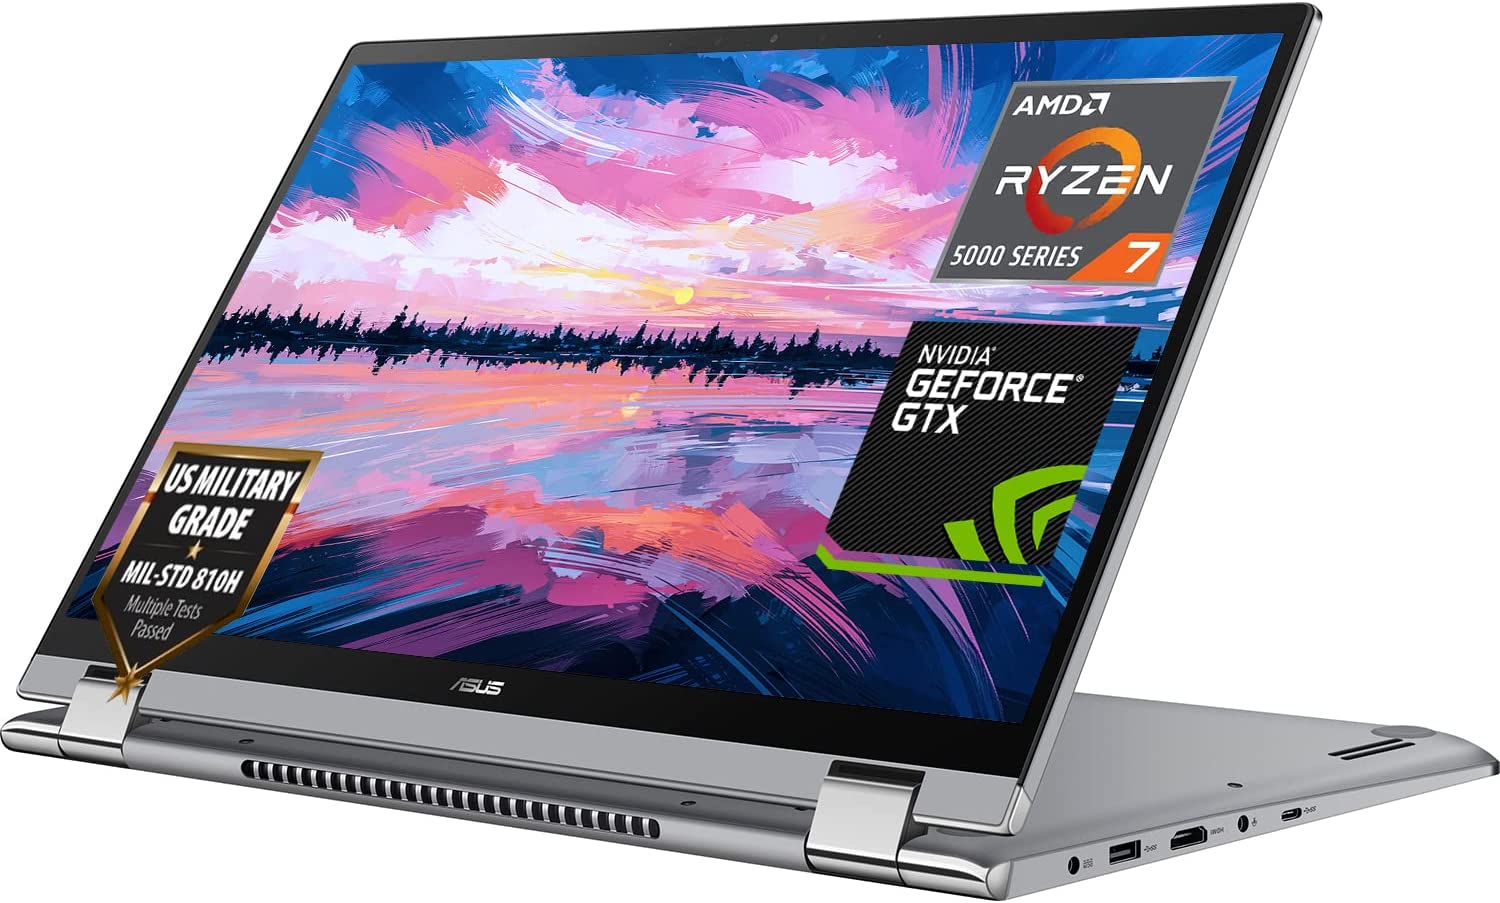 ASUS Zenbook 2-in-1 Laptop, 15.6 inch FHD Touchscreen, AMD Ryzen 7 5700U Processor